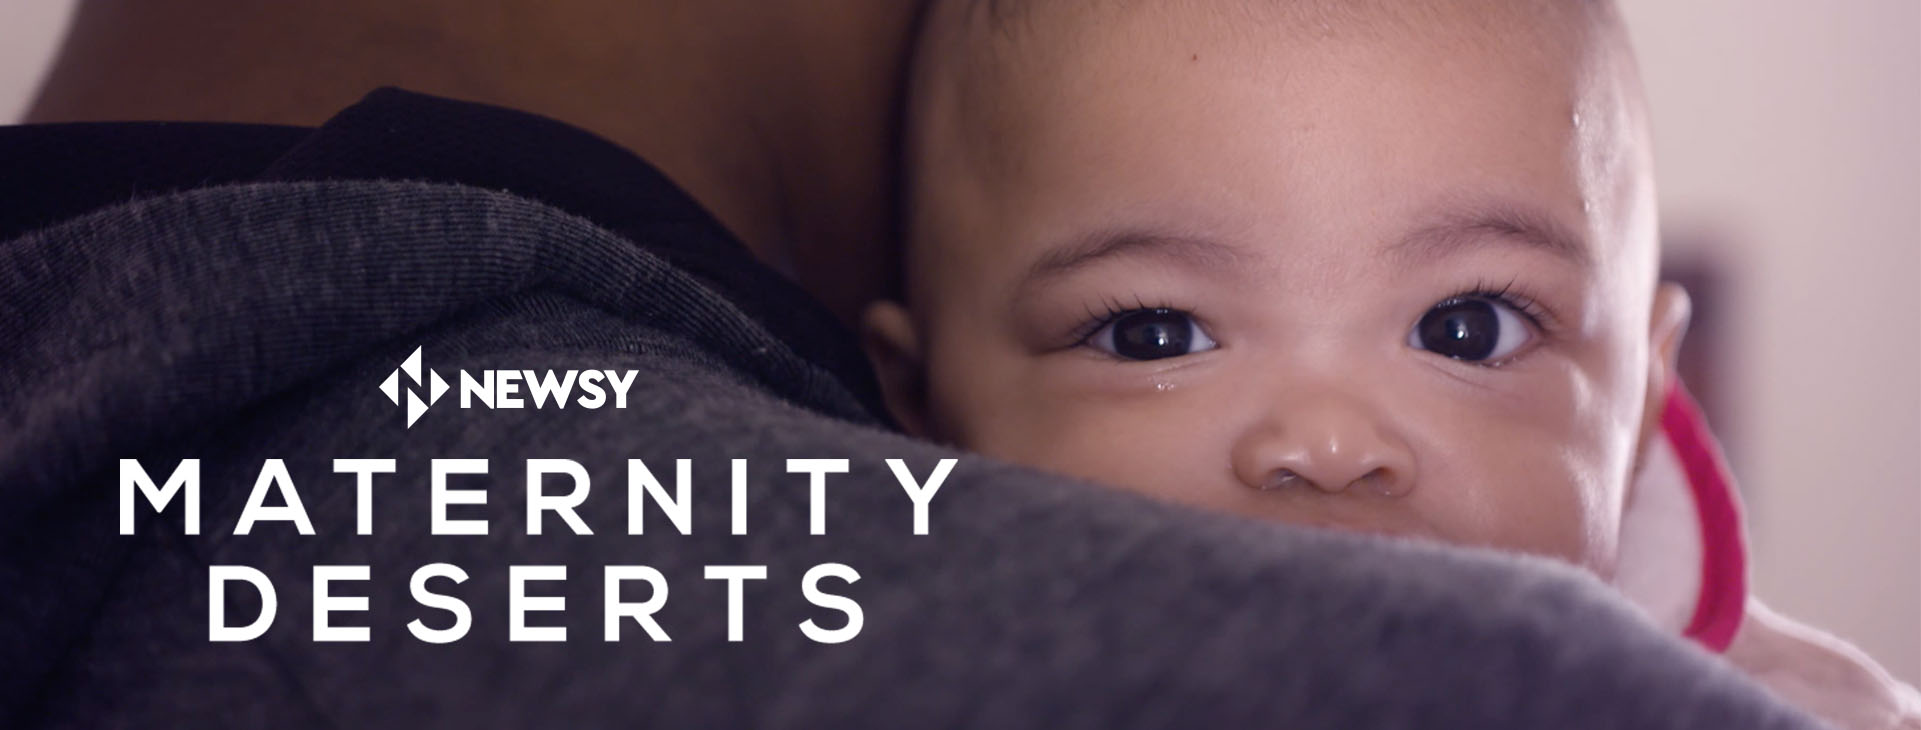 Maternity Deserts Newsy documentary logo